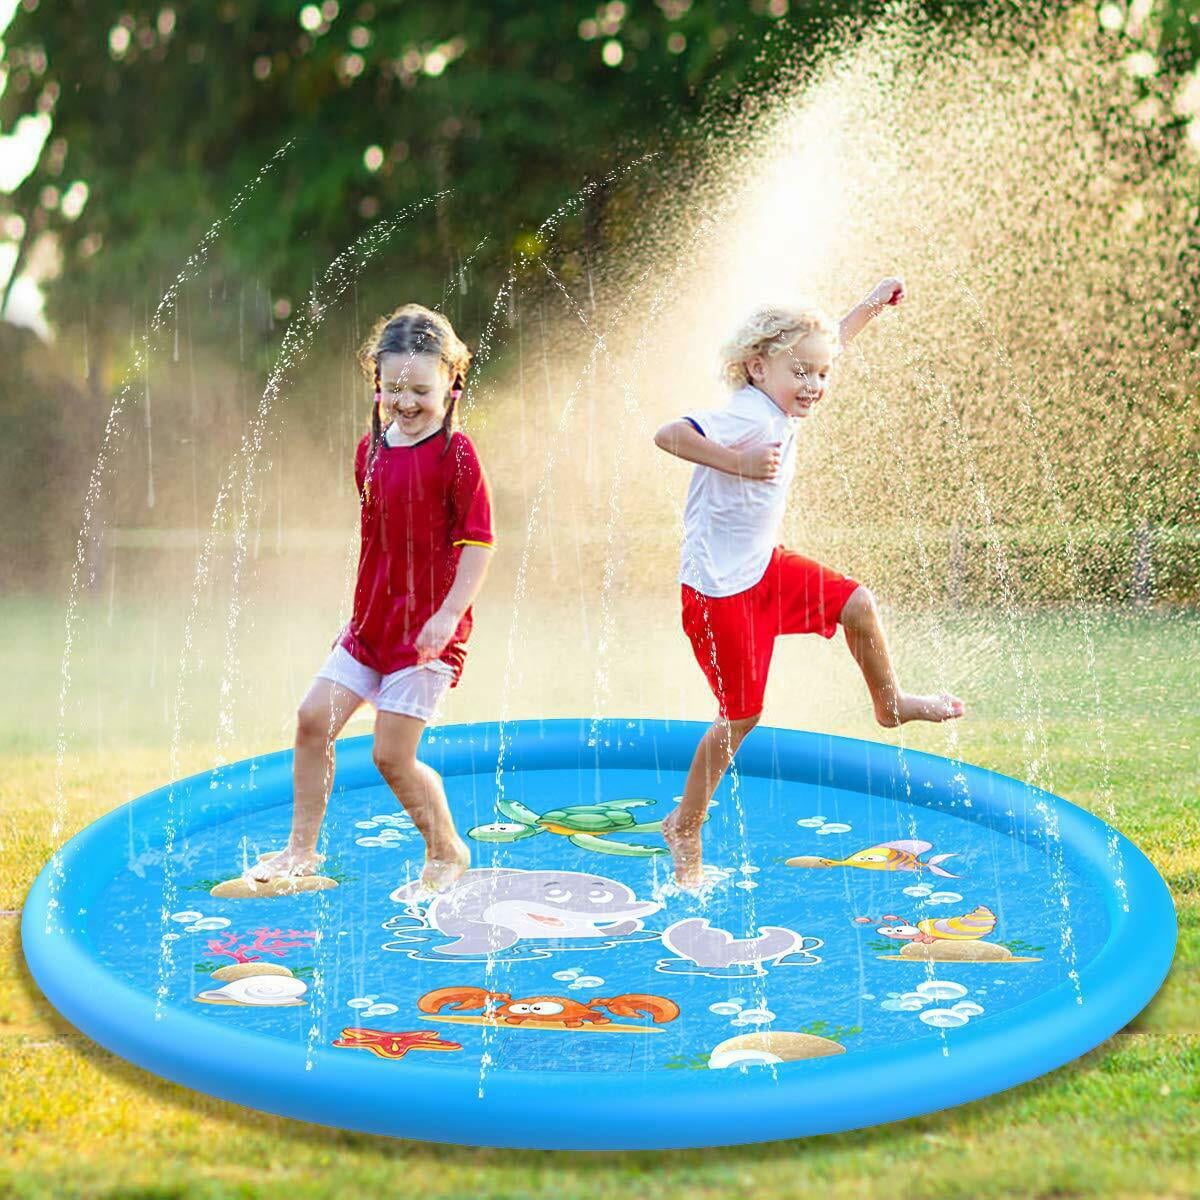 deAO Sprinkle & Splash Pad Outdoor Garden Summer Spray Toy for Kids Blue 